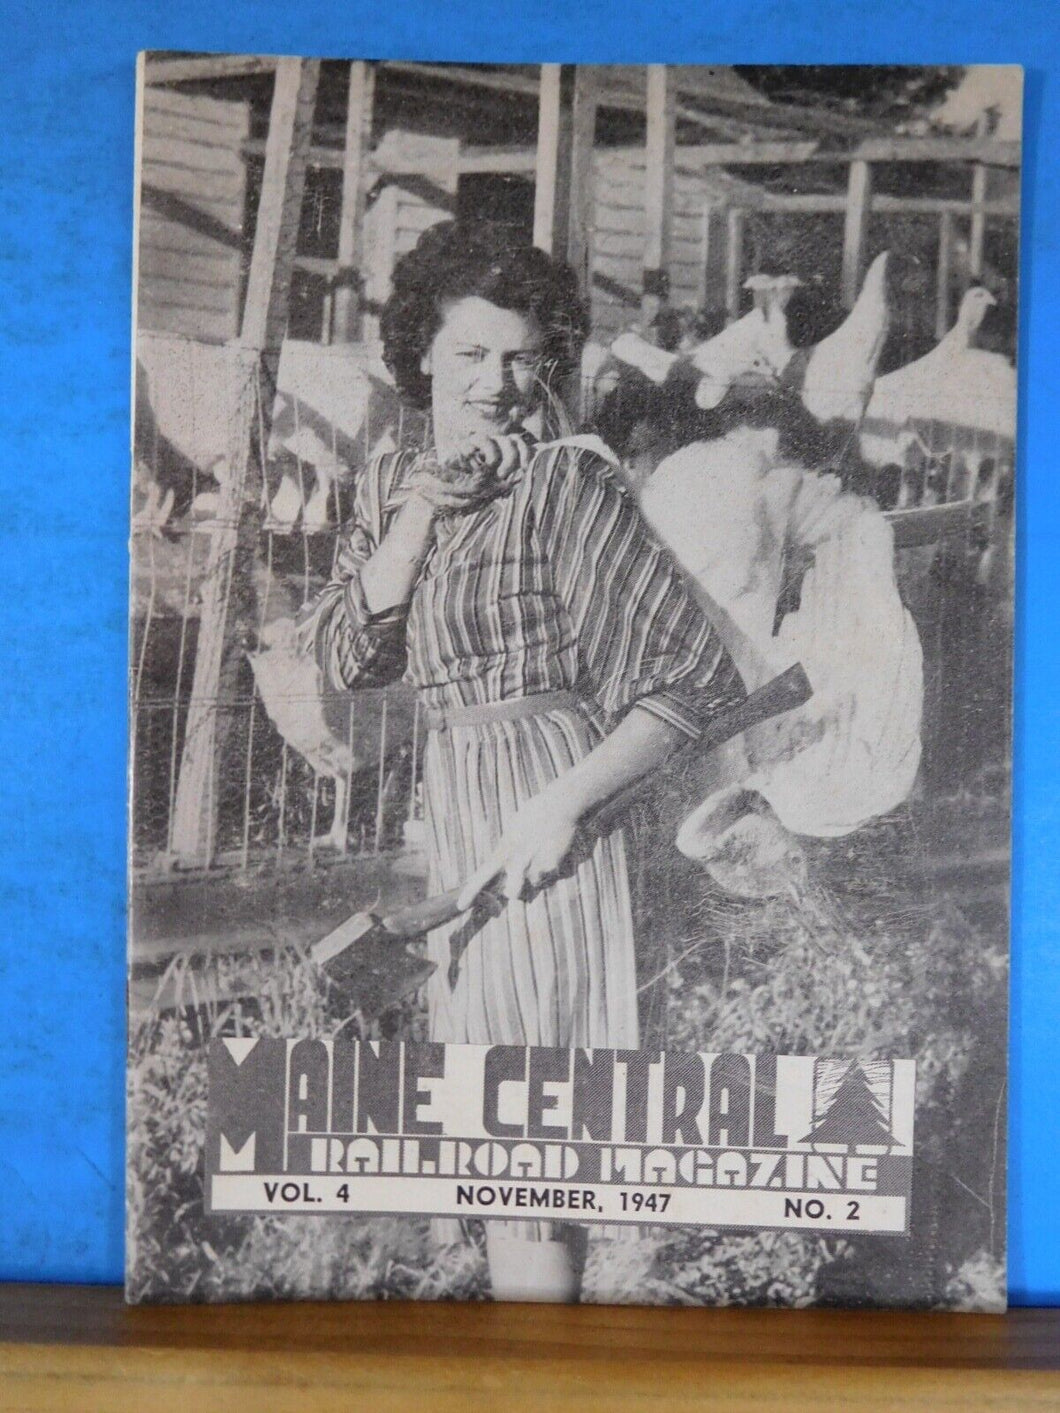 Maine Central Railroad Employees Magazine 1947 November